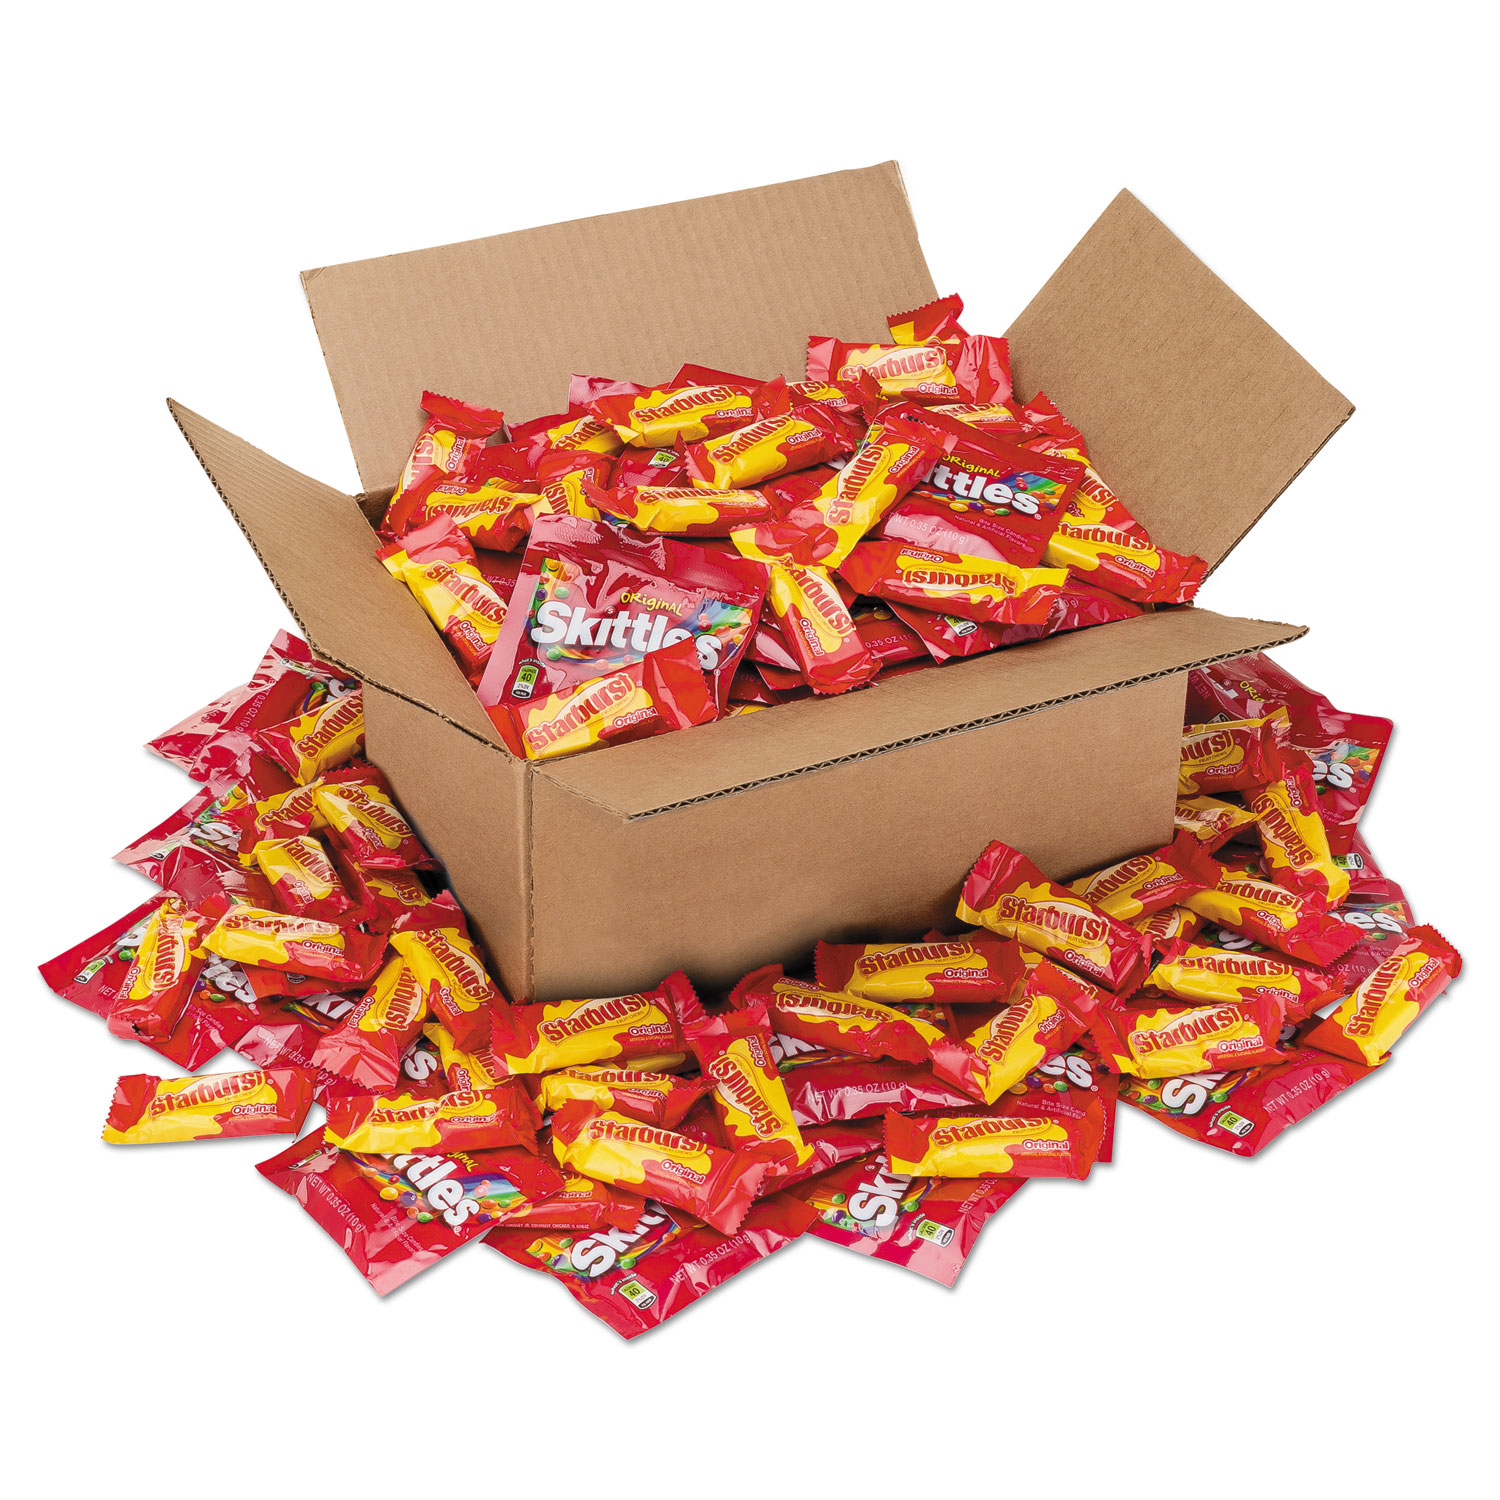  Office Snax 00631 Candy Assortments, Skittles/Starburst, 5 lb Box (OFX00631) 